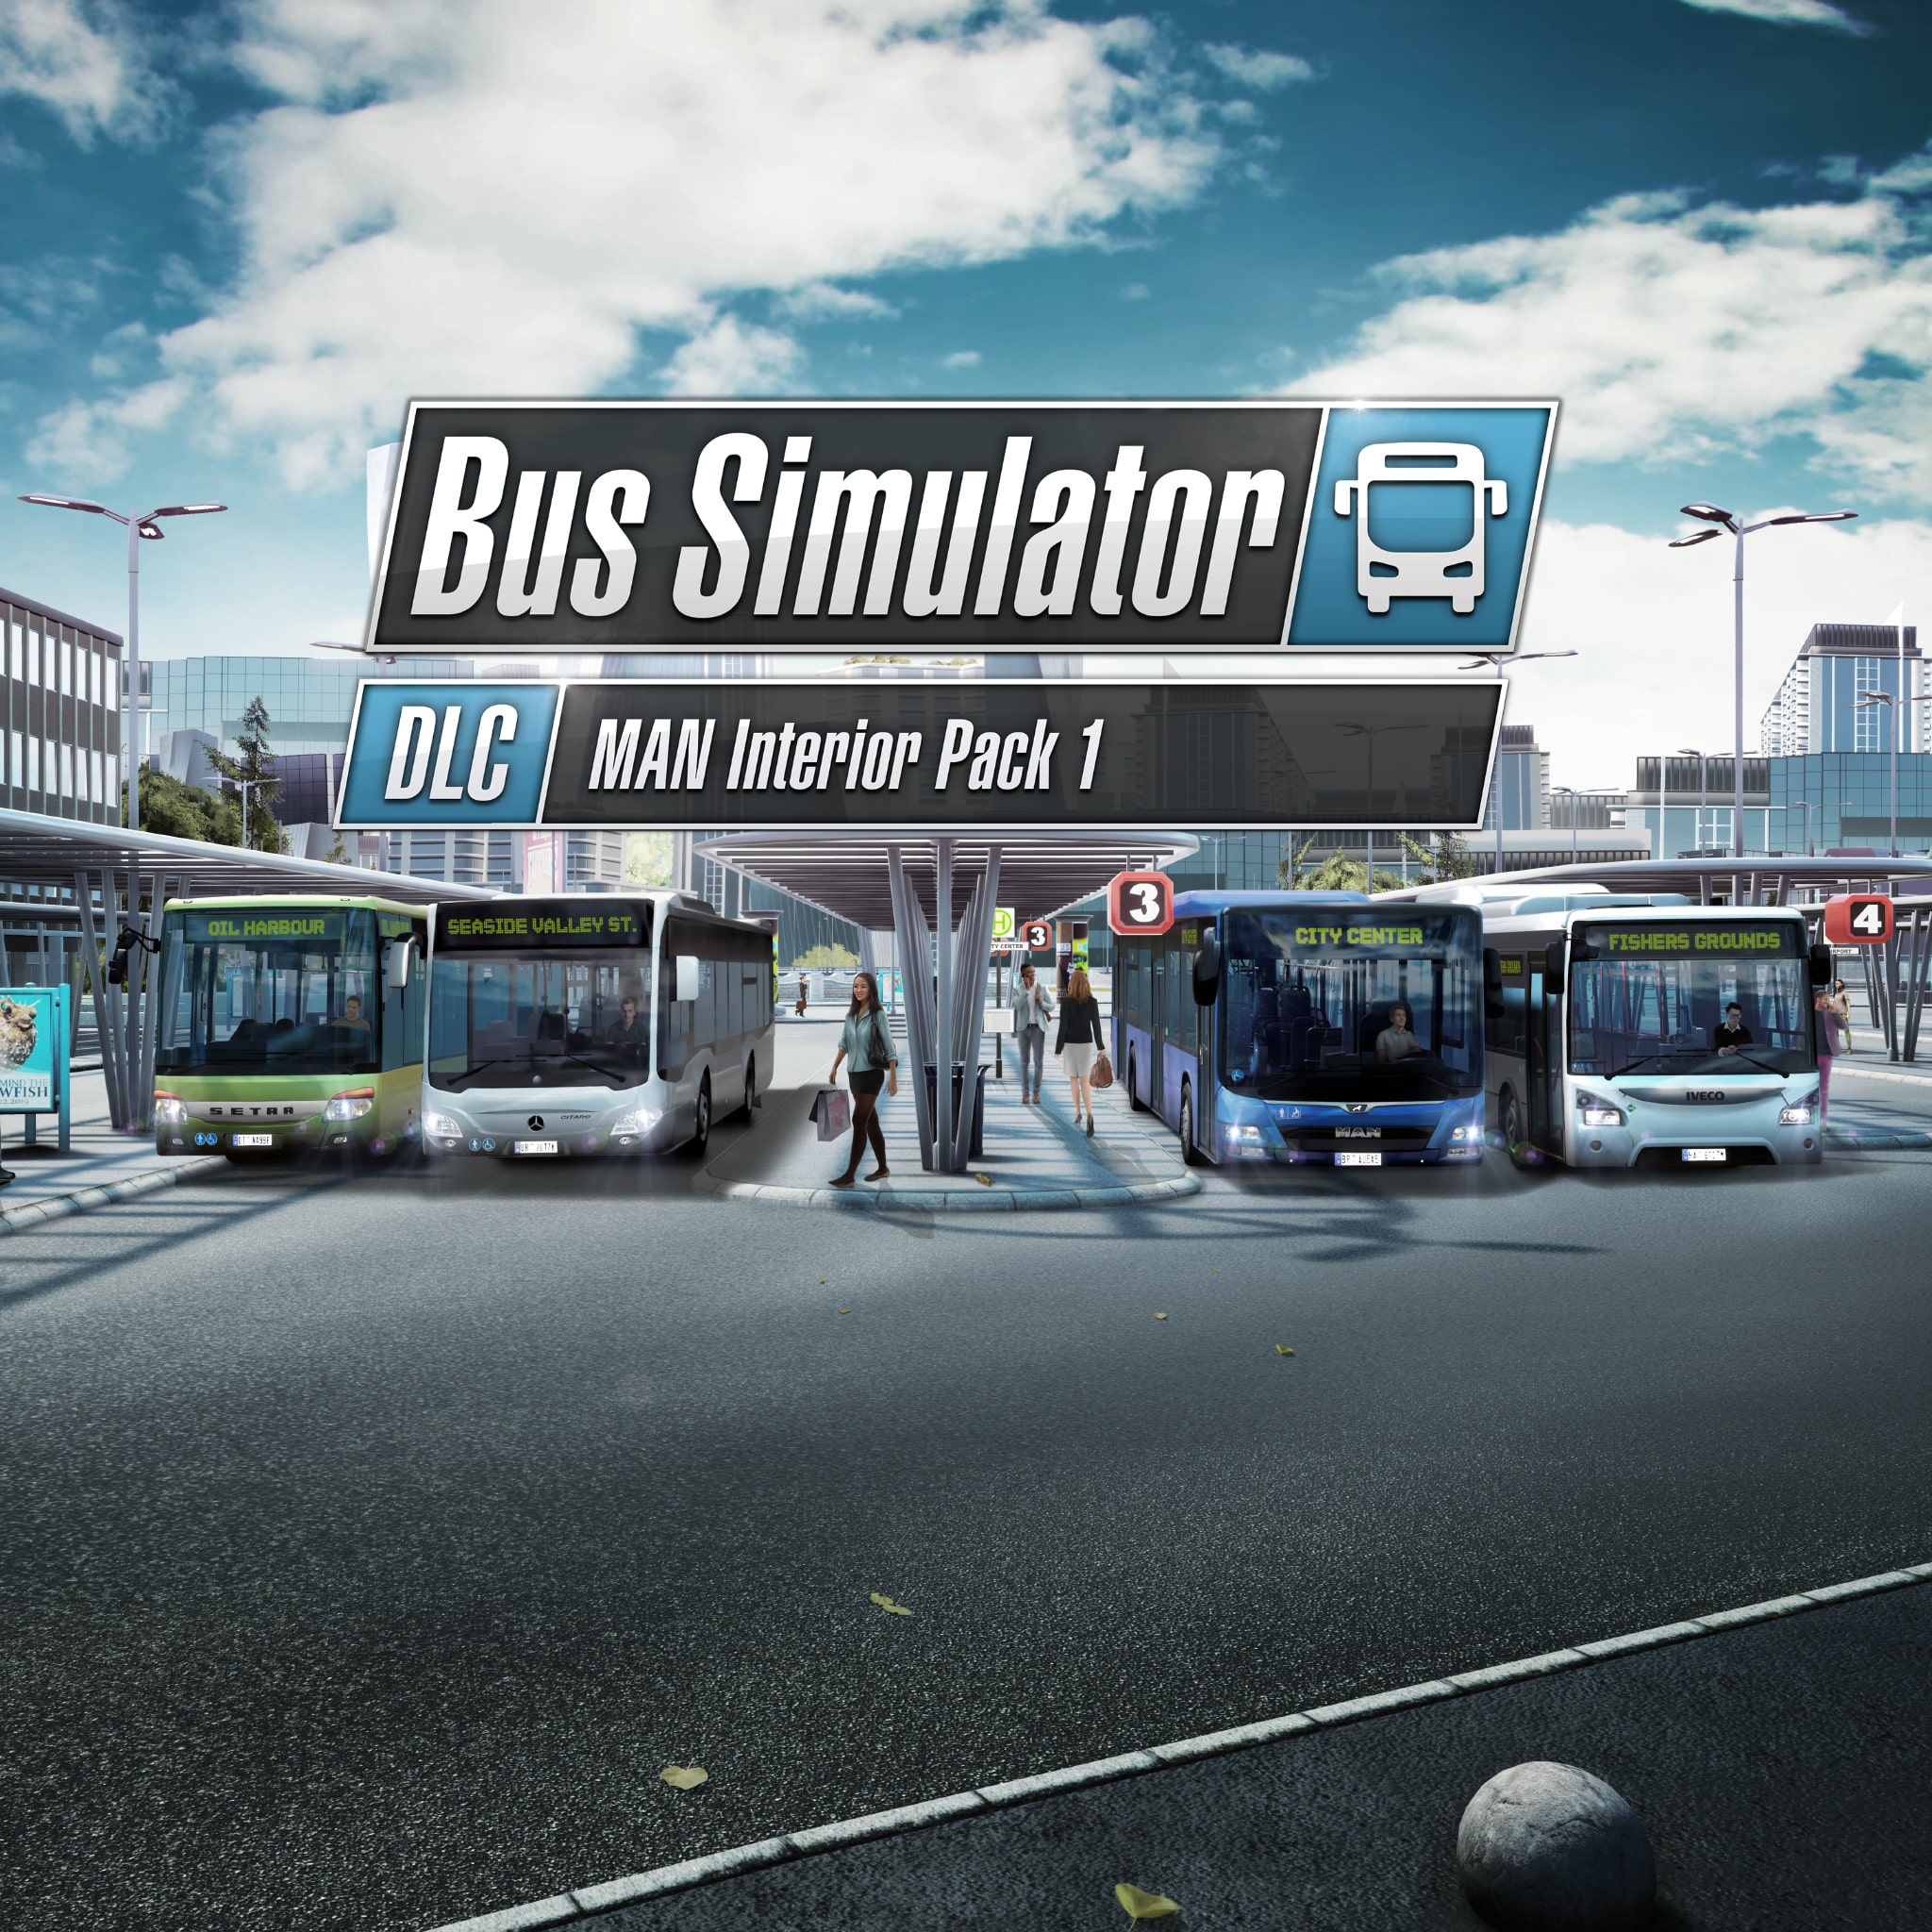 esrb rating bus simulator 18